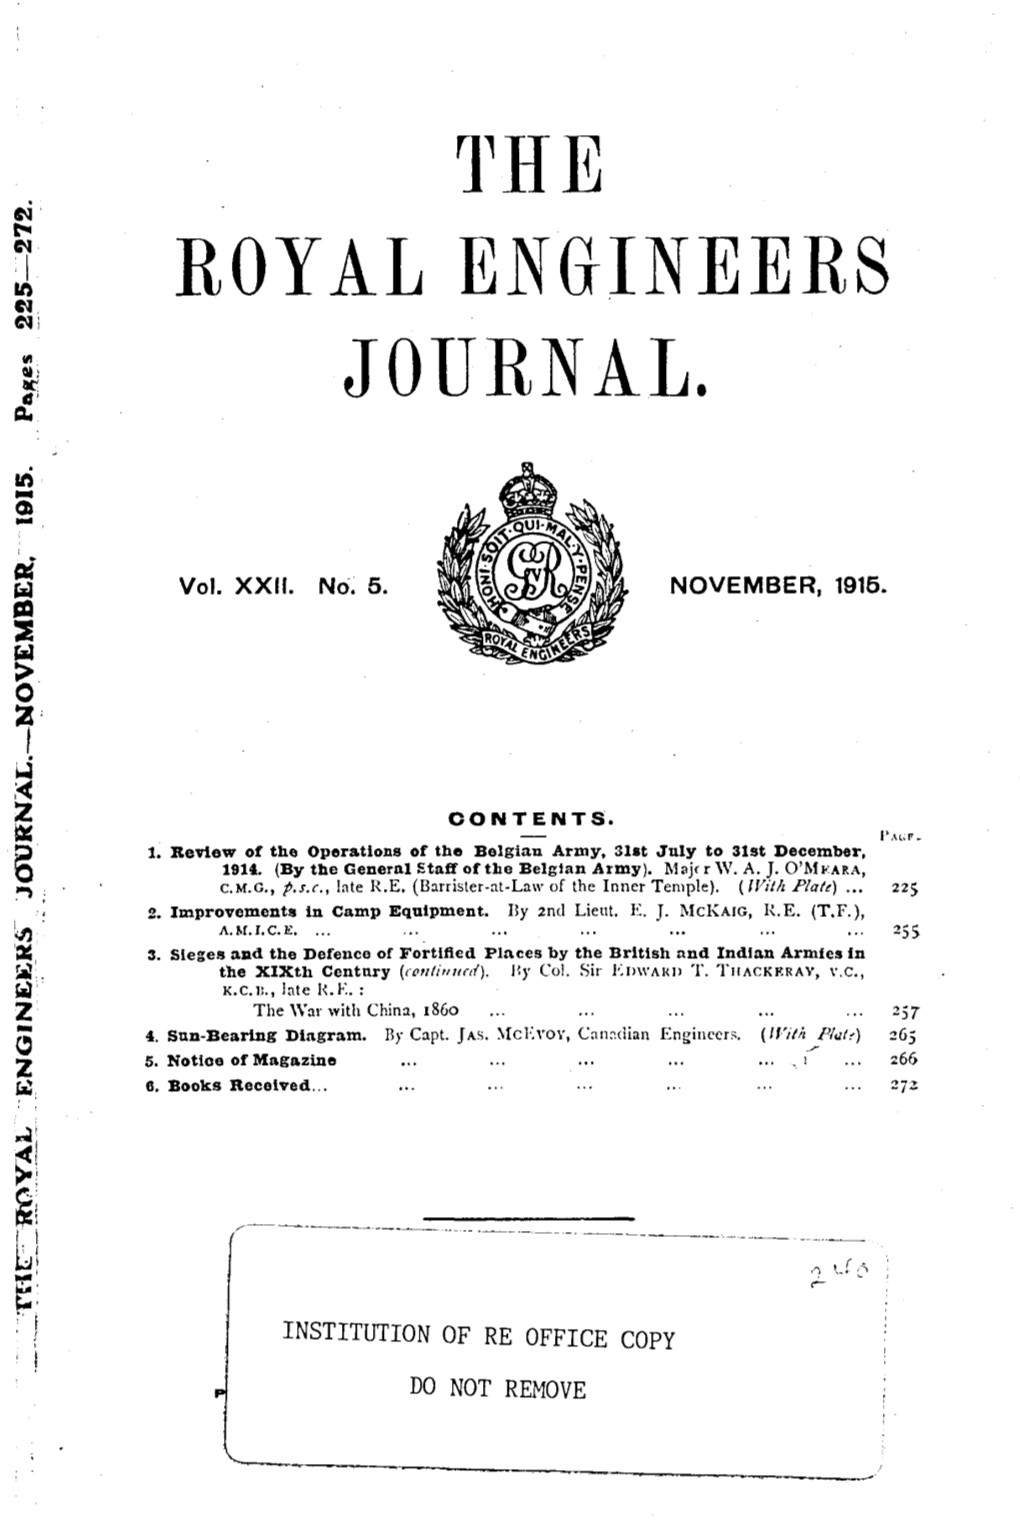 T1he Royal Engineers Journal